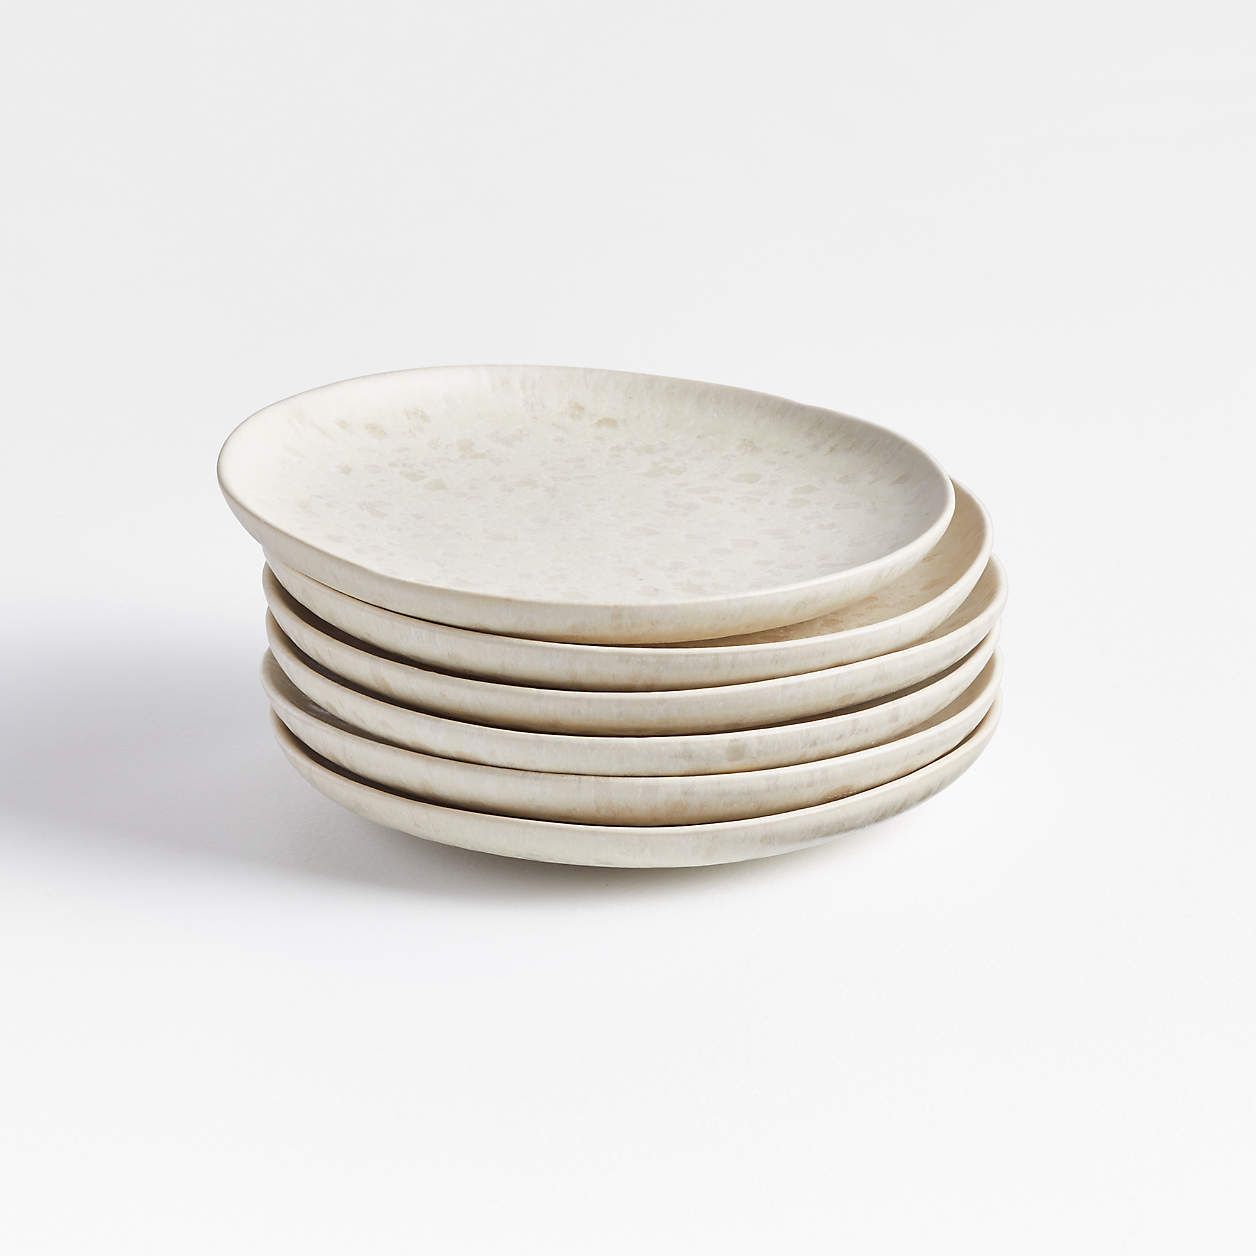 Douzee Aperitifs Plates, Set of 6 by Athena Calderone